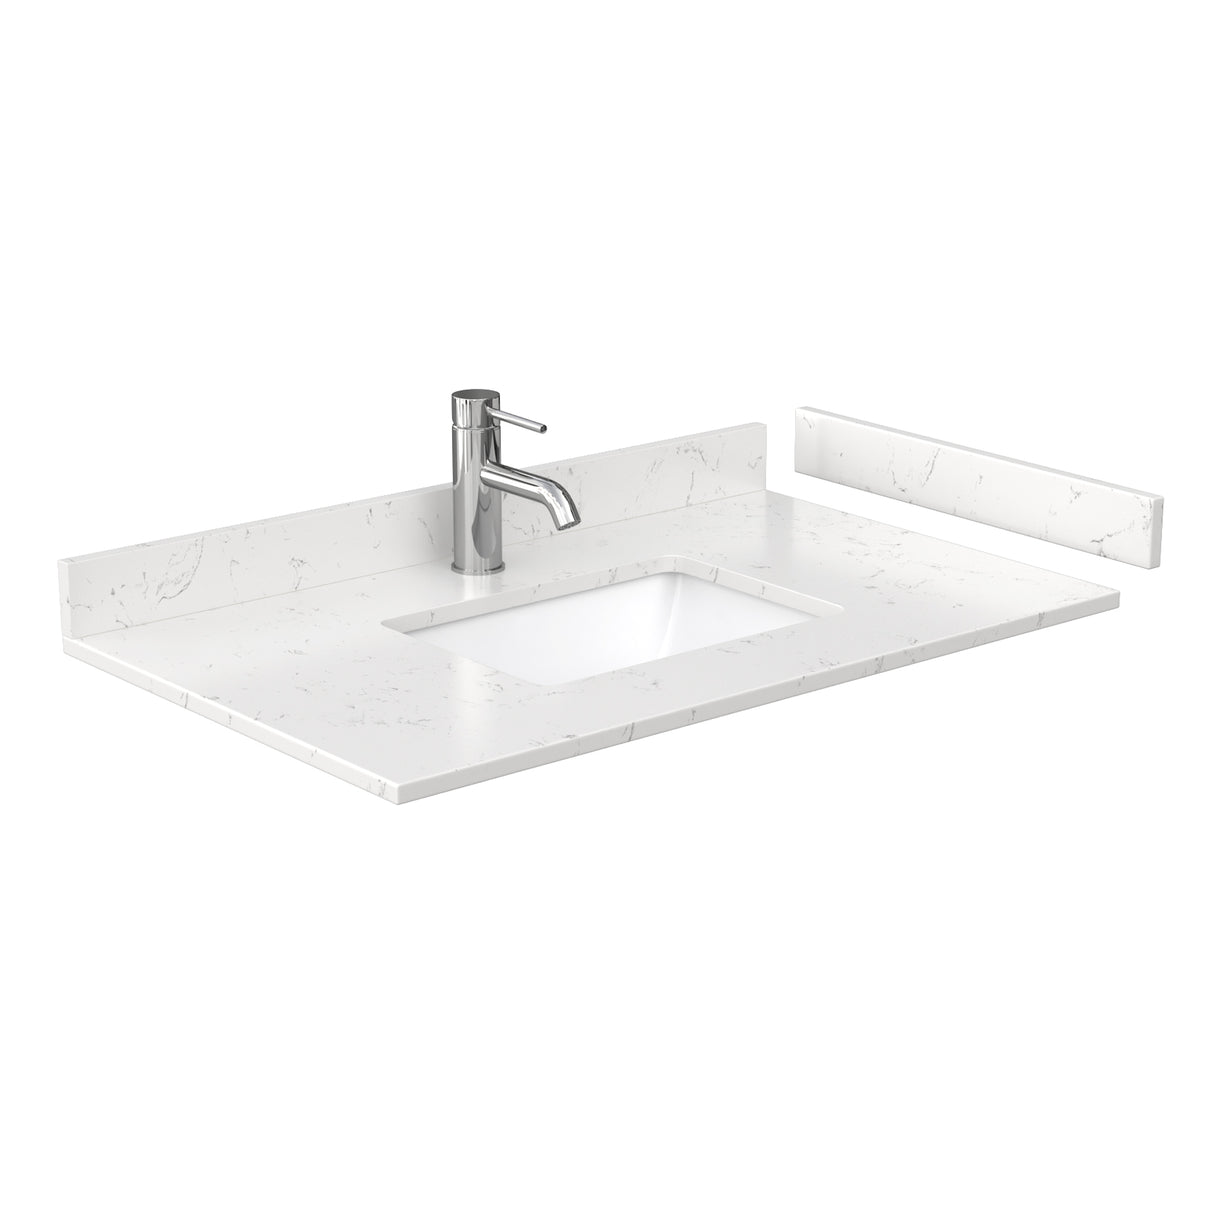 Sheffield 36 Inch Single Bathroom Vanity in White Carrara Cultured Marble Countertop Undermount Square Sink Medicine Cabinet